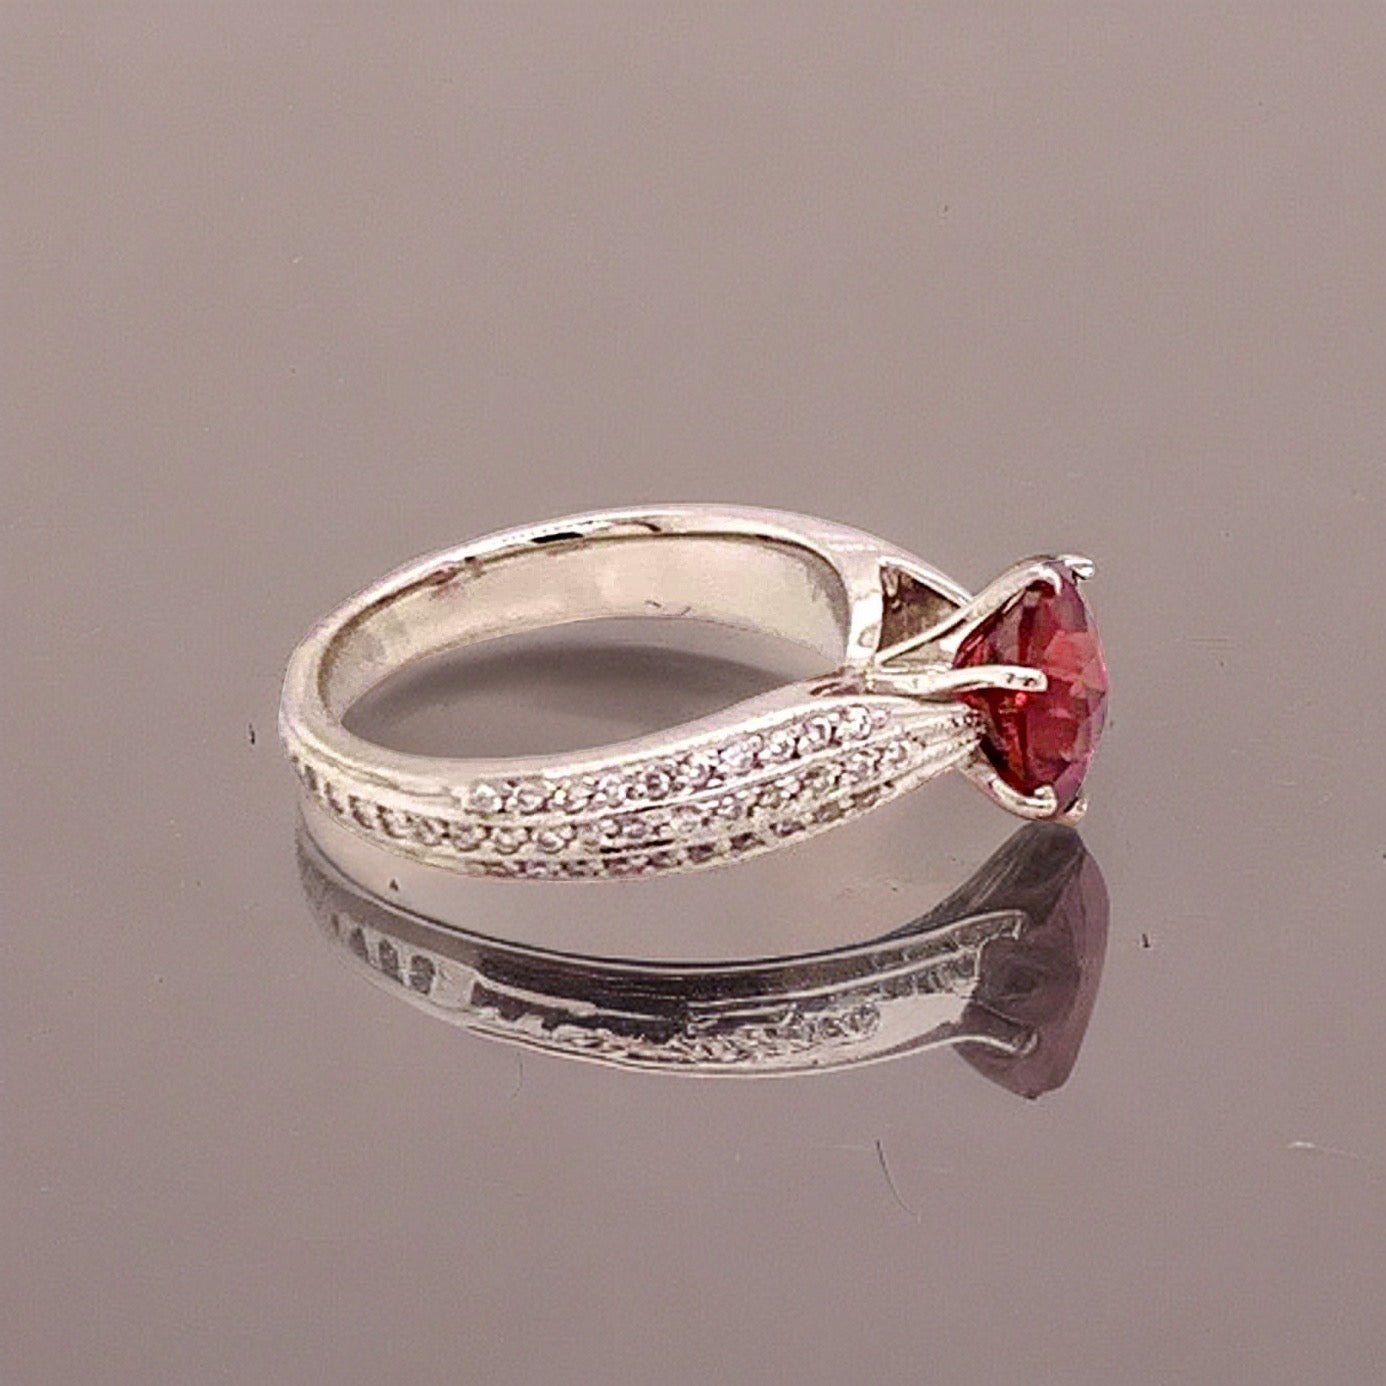 Diamond Platinum Tourmaline Rubellite Ring 5.75 2.43 TCW Certified $4,950 911025 - Certified Fine Jewelry